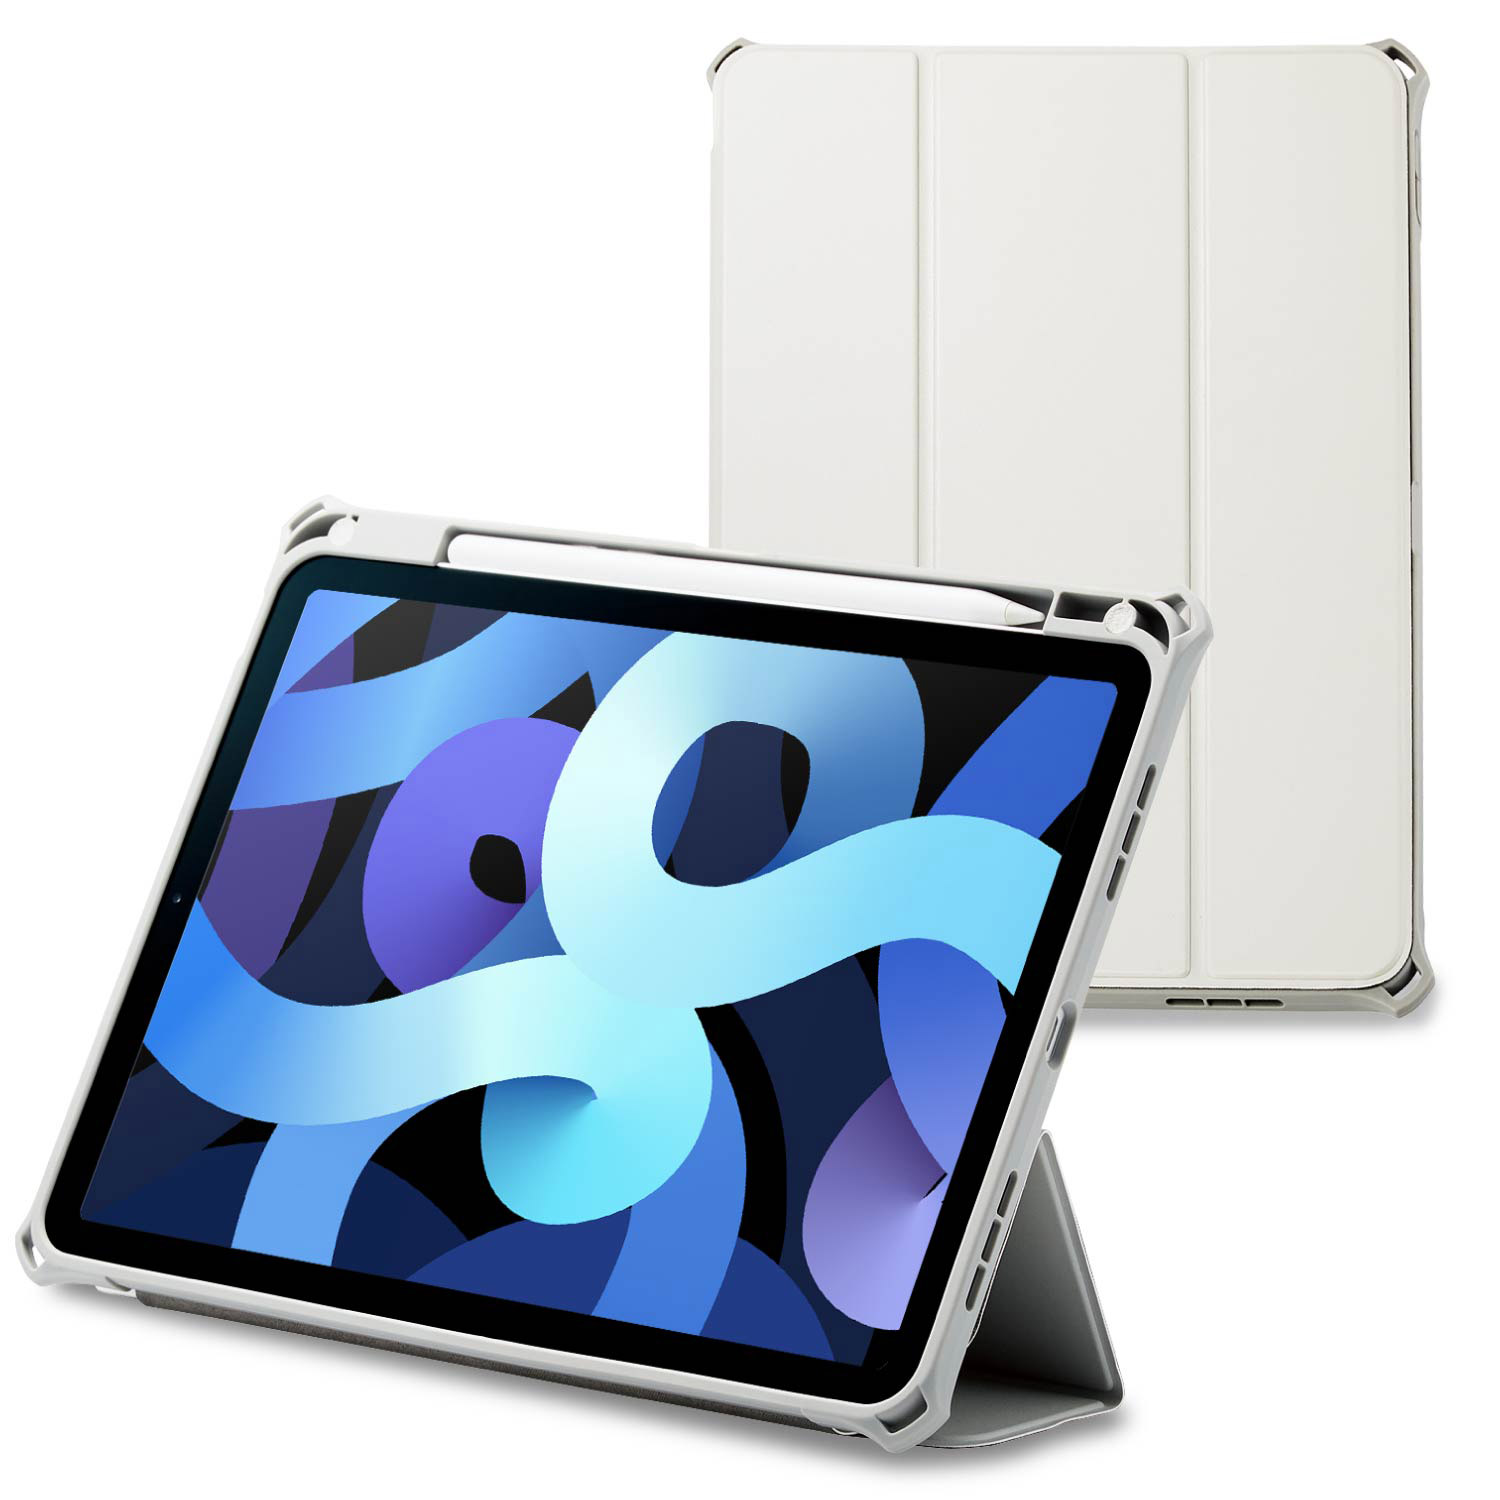 iPad air 16GB シルバー キーボード付き 管え52 - www.sorbillomenu.com